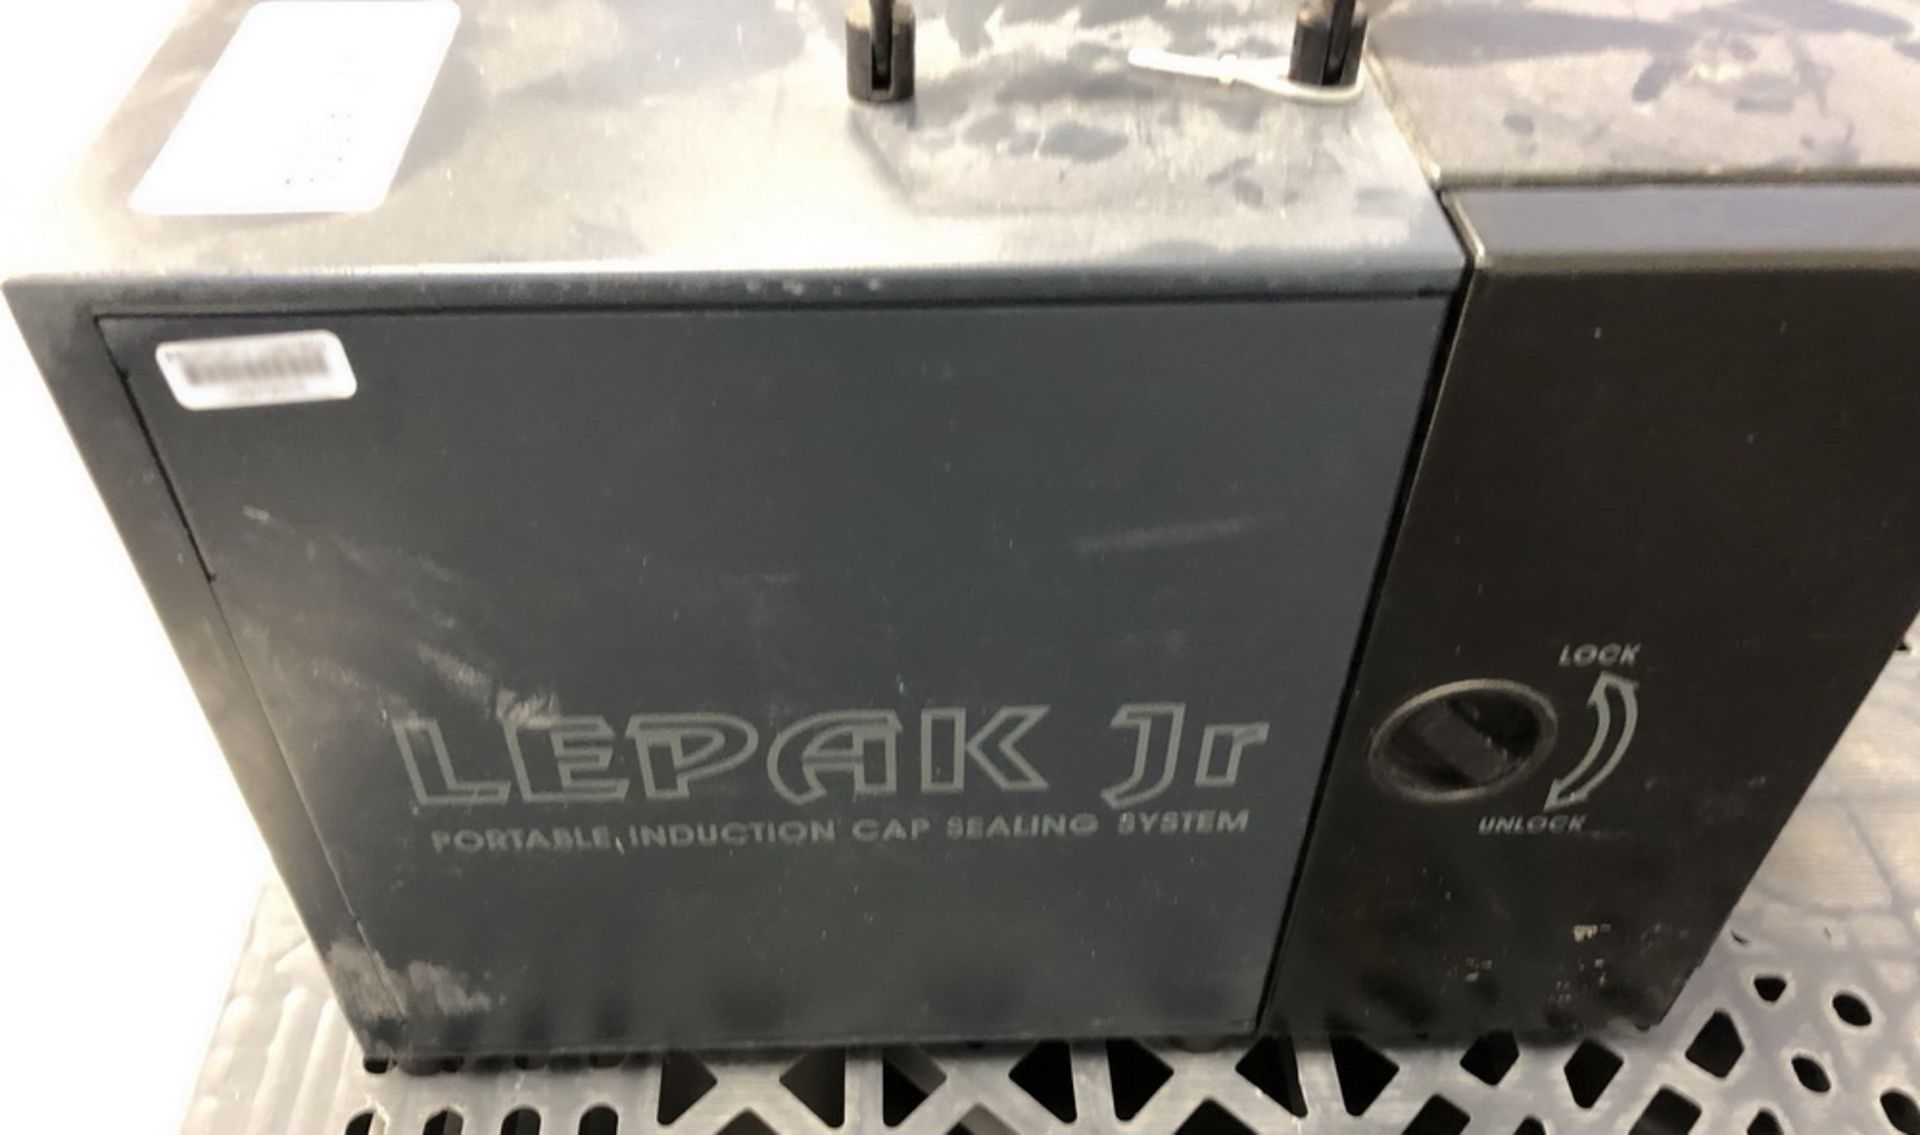 Lepel Portable Induction Cap Sealer, Model Lepak Jr - Image 2 of 3